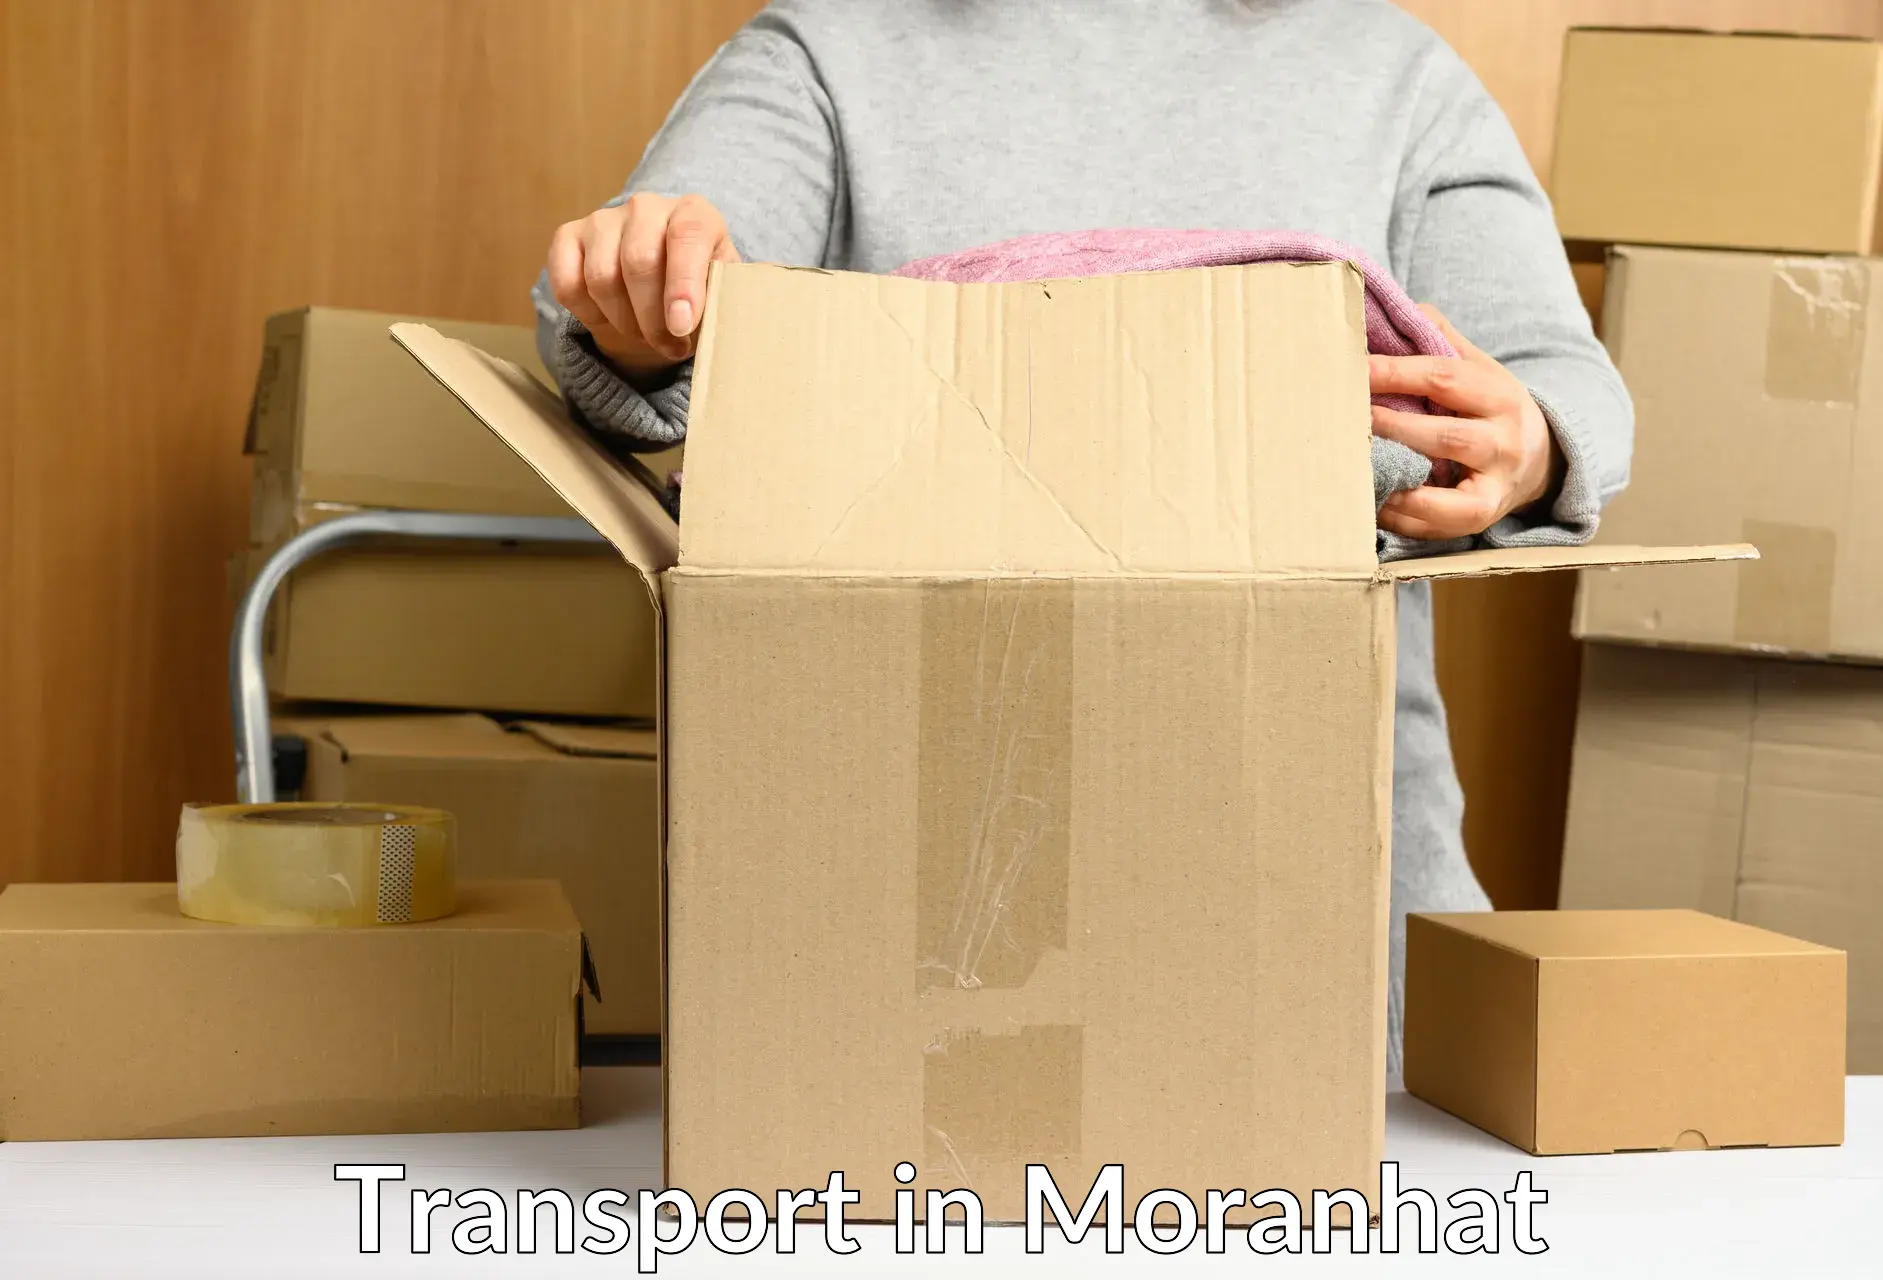 Online transport in Moranhat